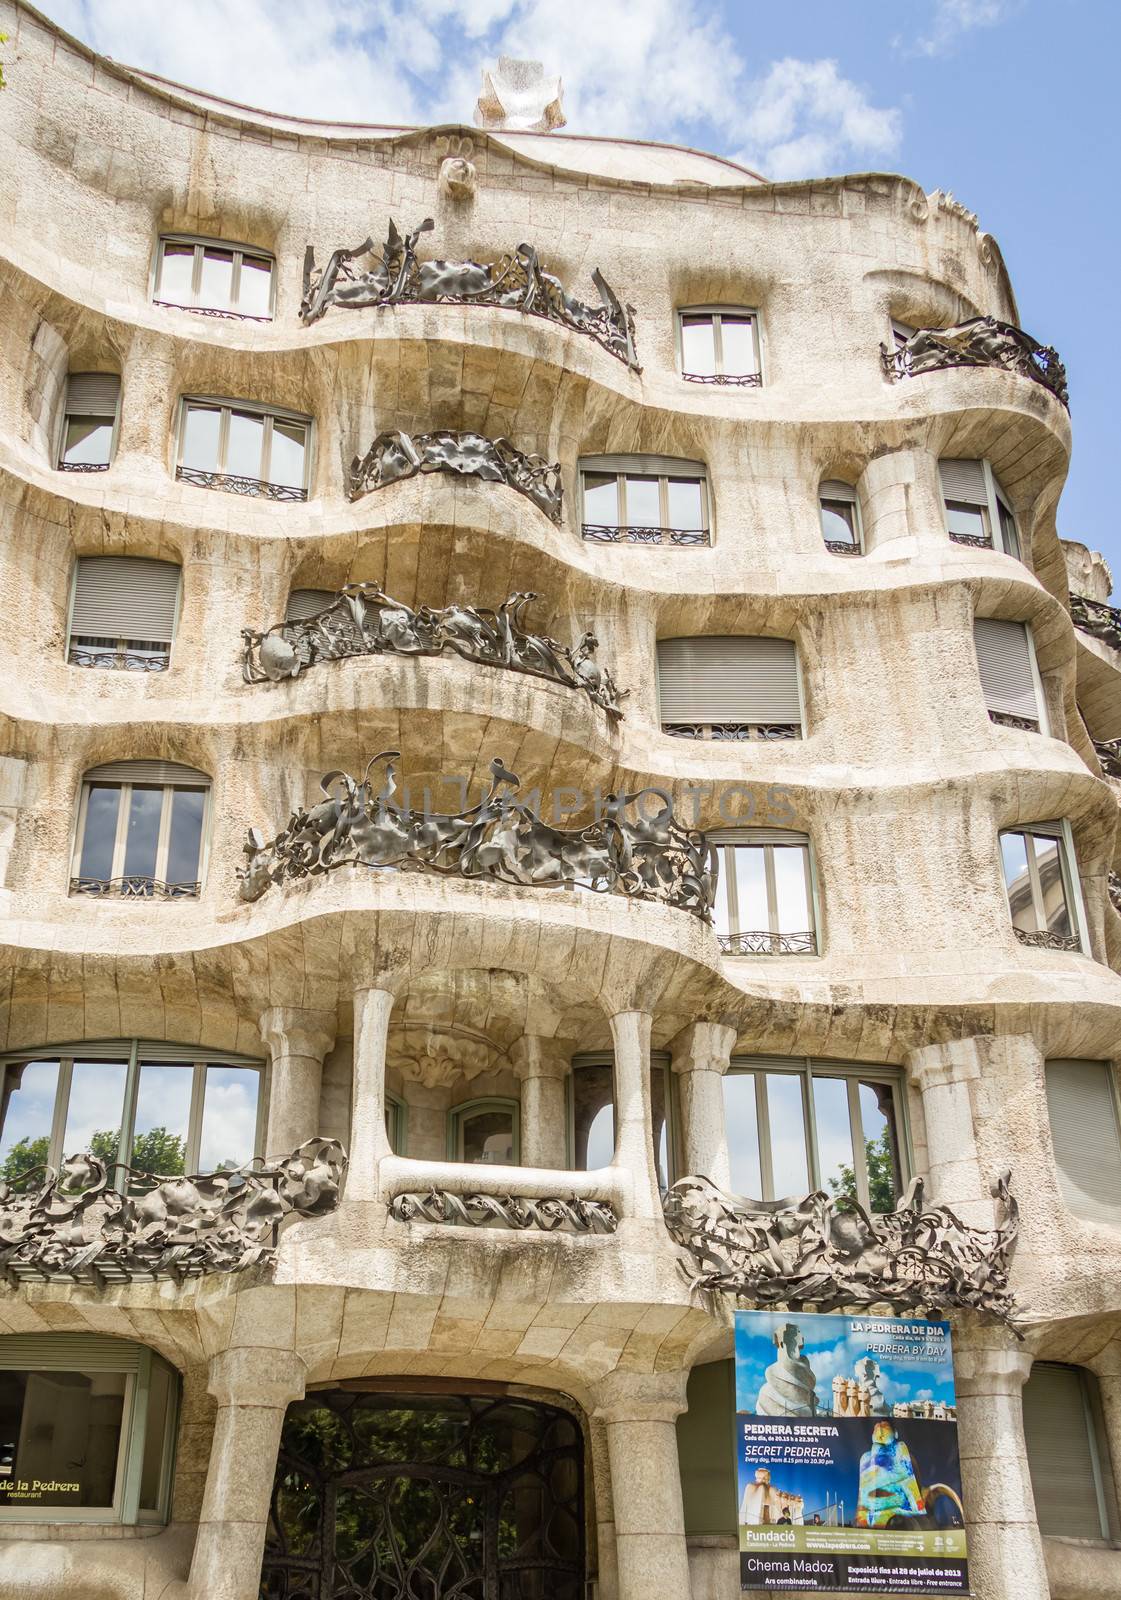 The Casa Mila, better known as La Pedrera, in Barcelona, Spain by doble.d